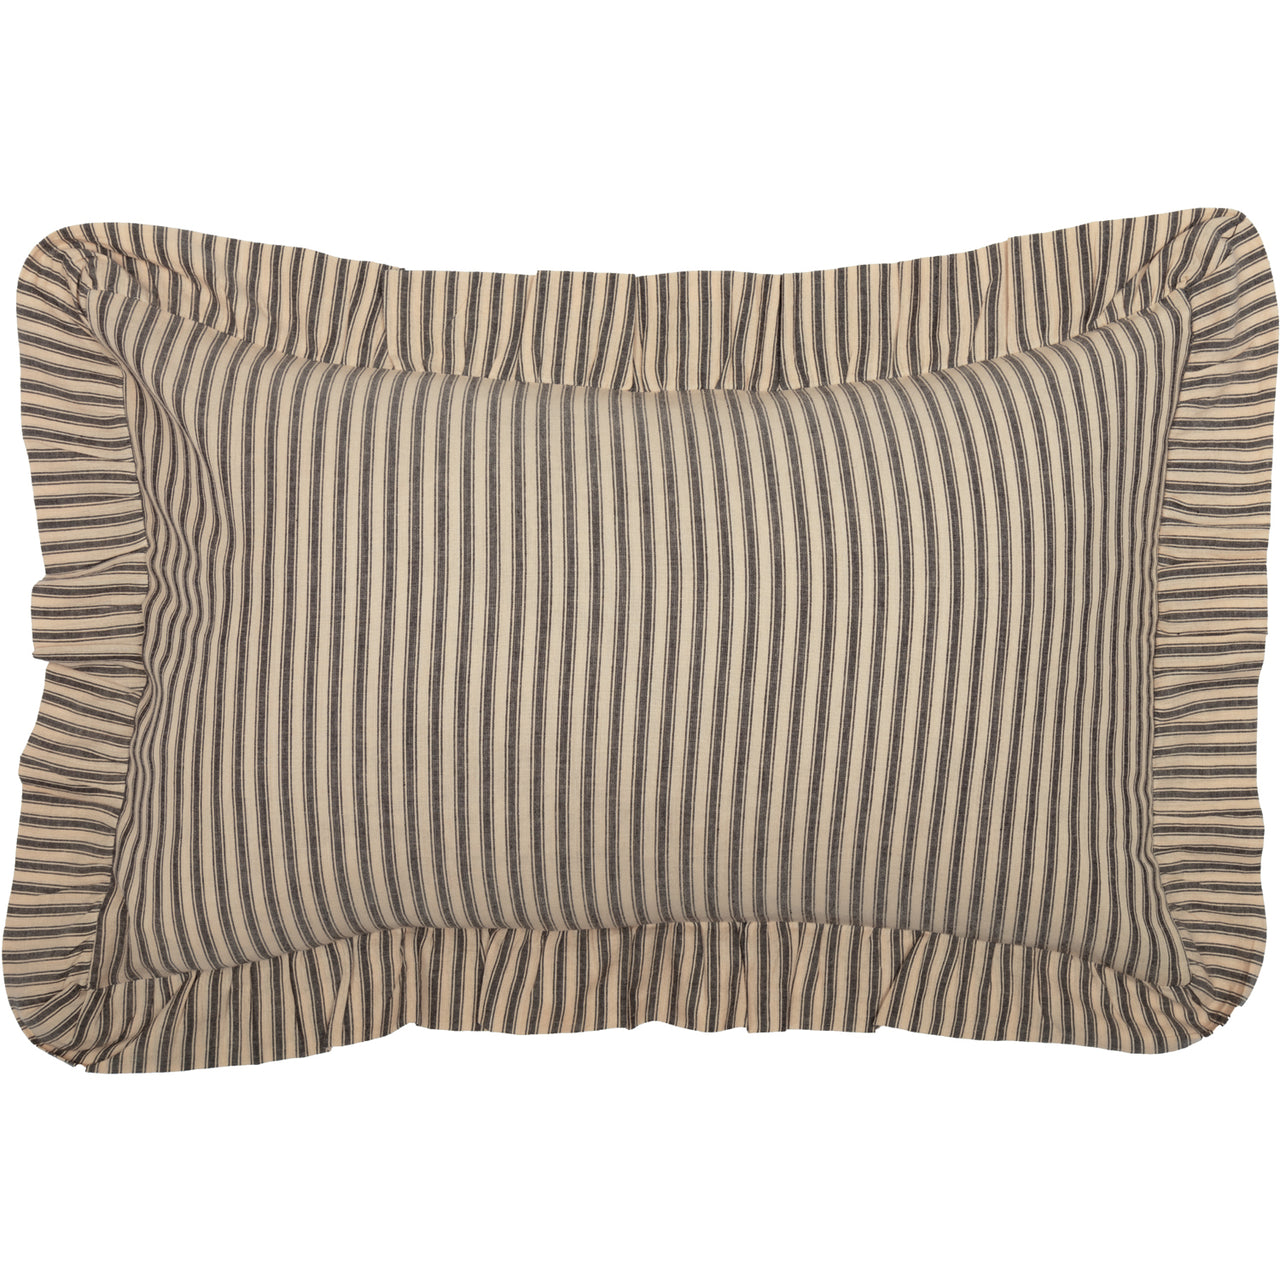 Sawyer Mill Charcoal Ticking Stripe Fabric Pillow 14x22 VHC Brands